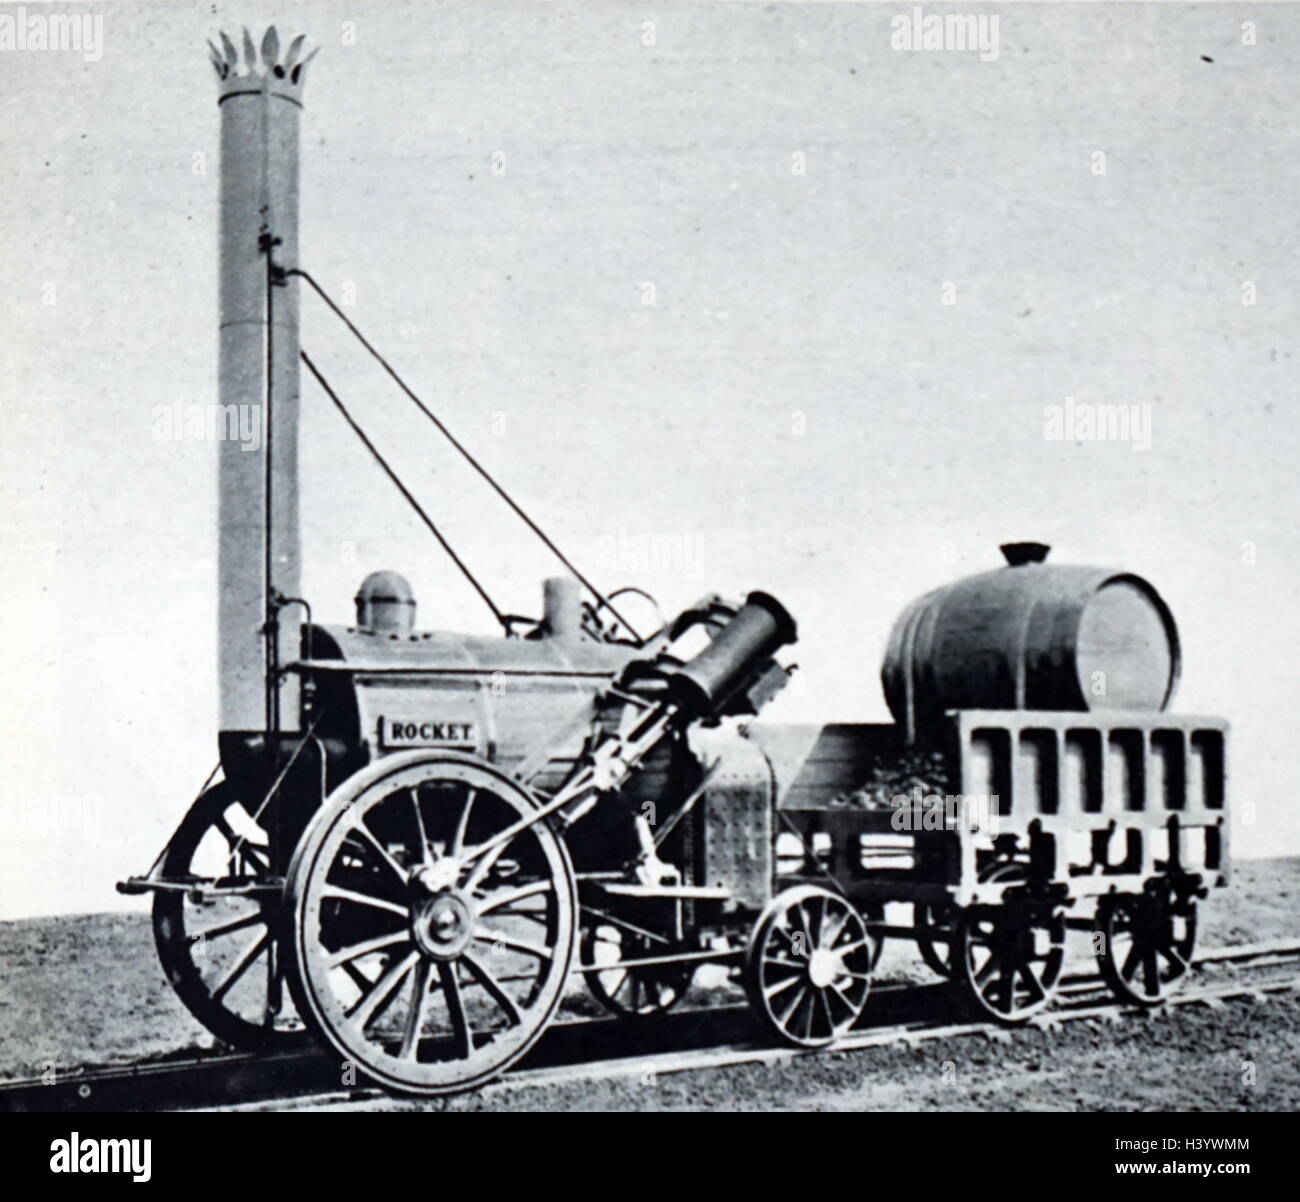 Foto von George Stephensons berühmten Dampf Lokomotive Rocket. Vom 19. Jahrhundert Stockfoto